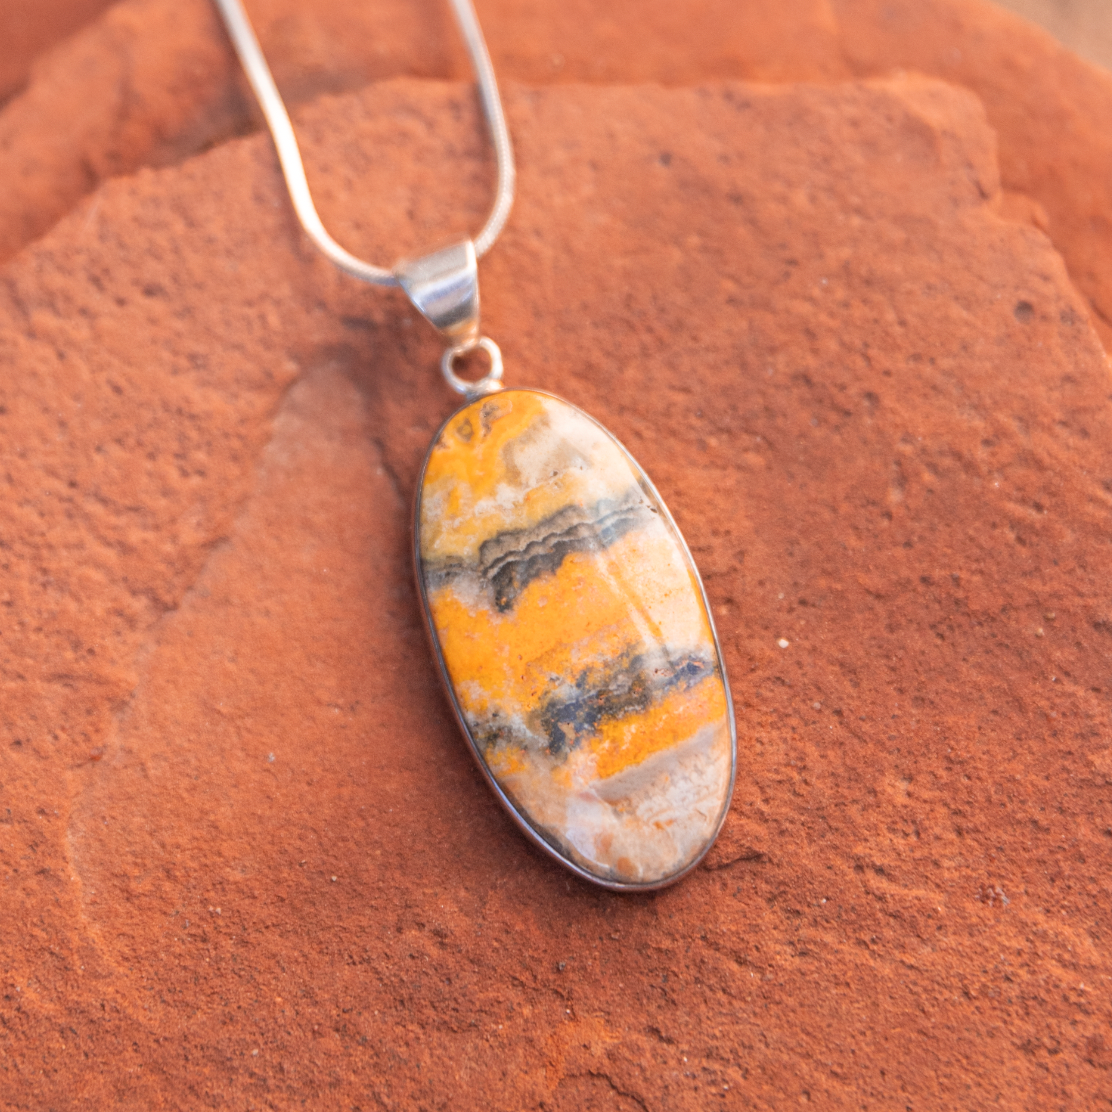 crystal jewelry: bumble bee jasper pendant in sedona, arizona used for energy healing